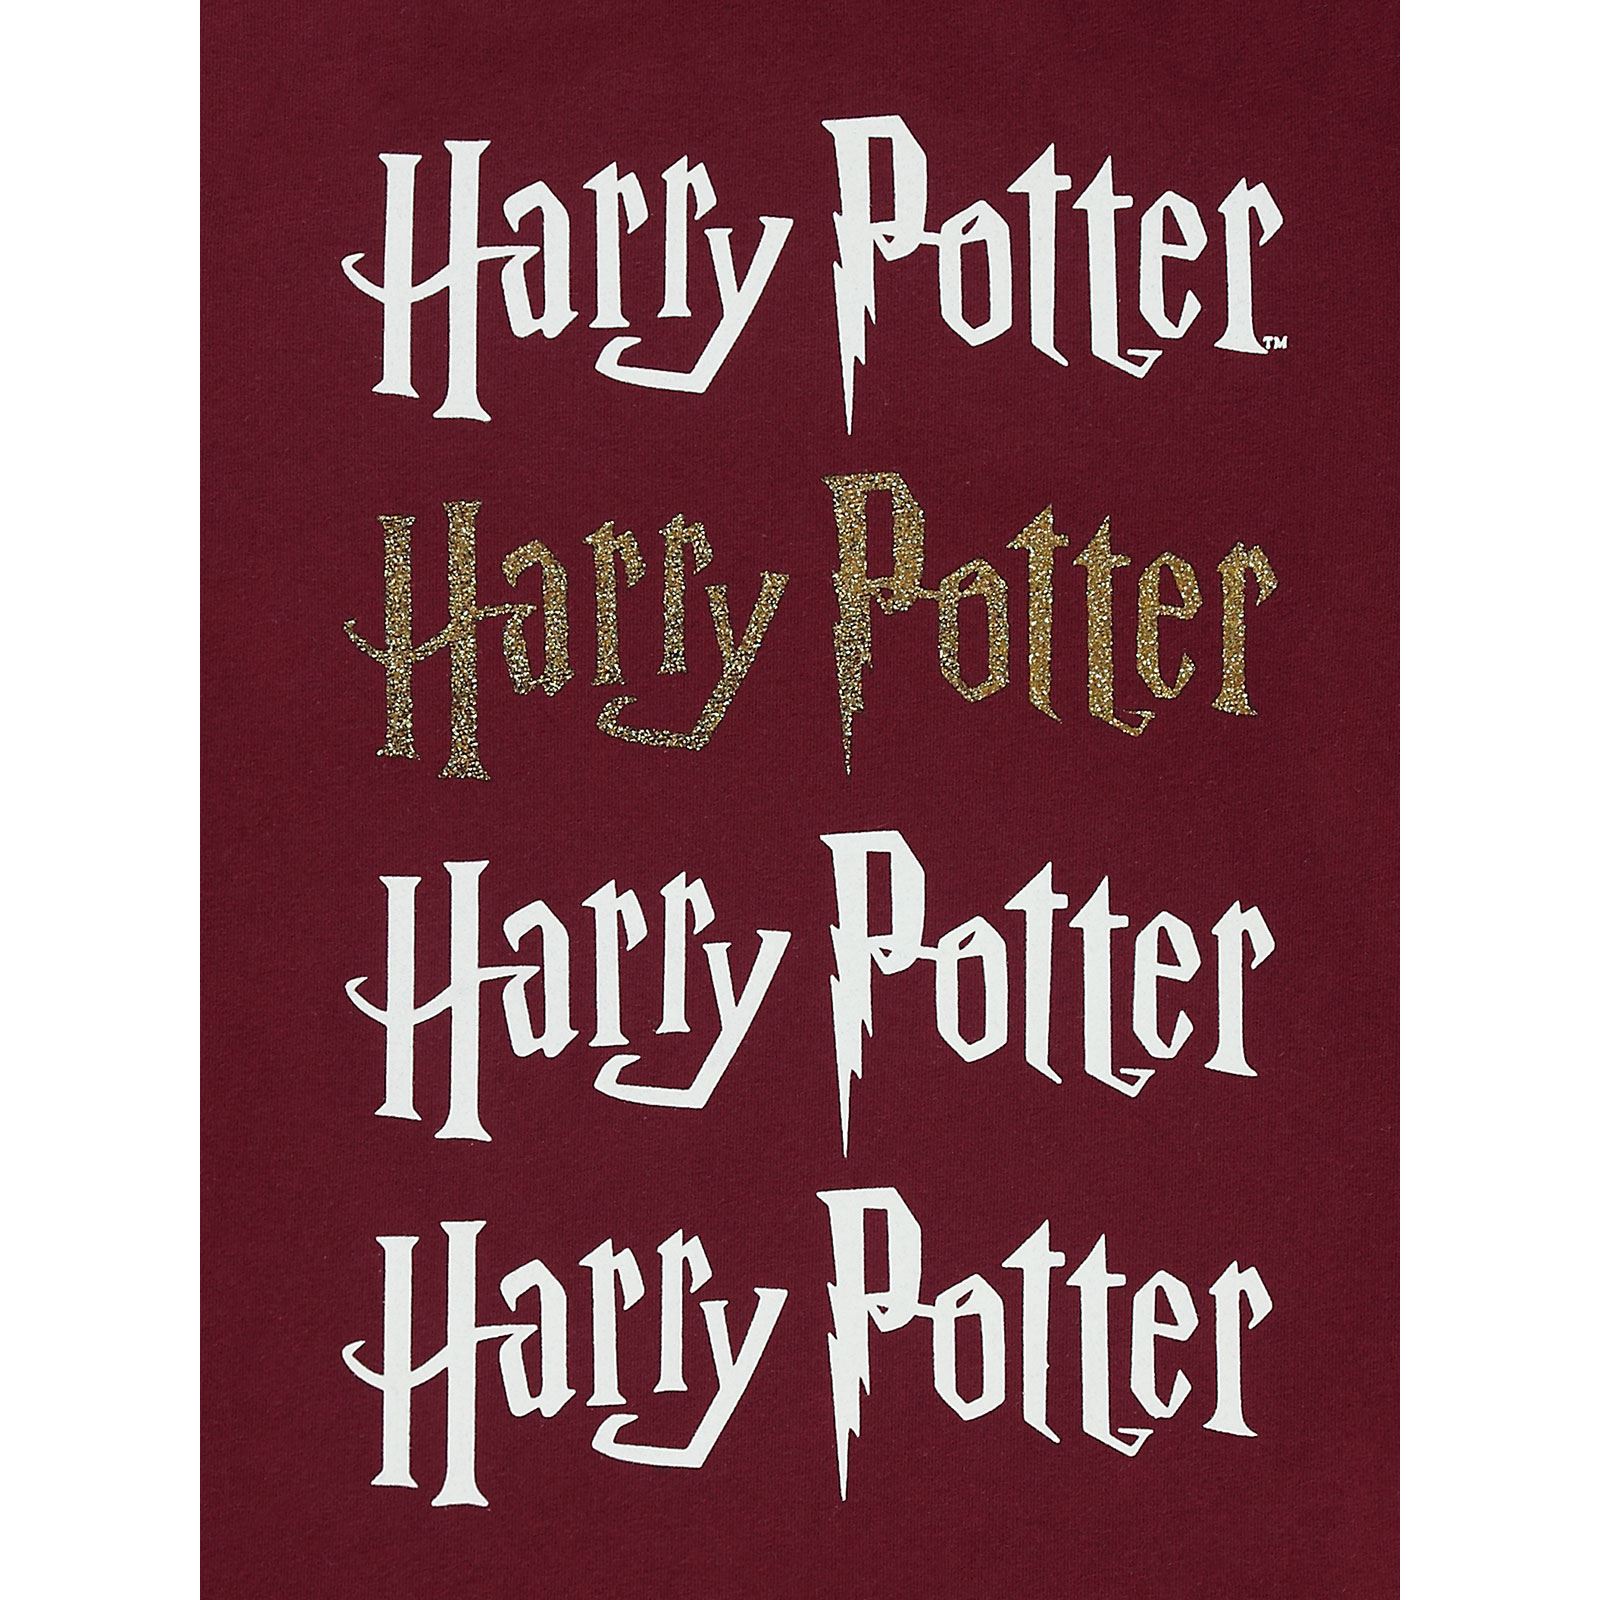 Harry Potter Kız Çocuk Sweatshirt 6-9 Yaş Bordo